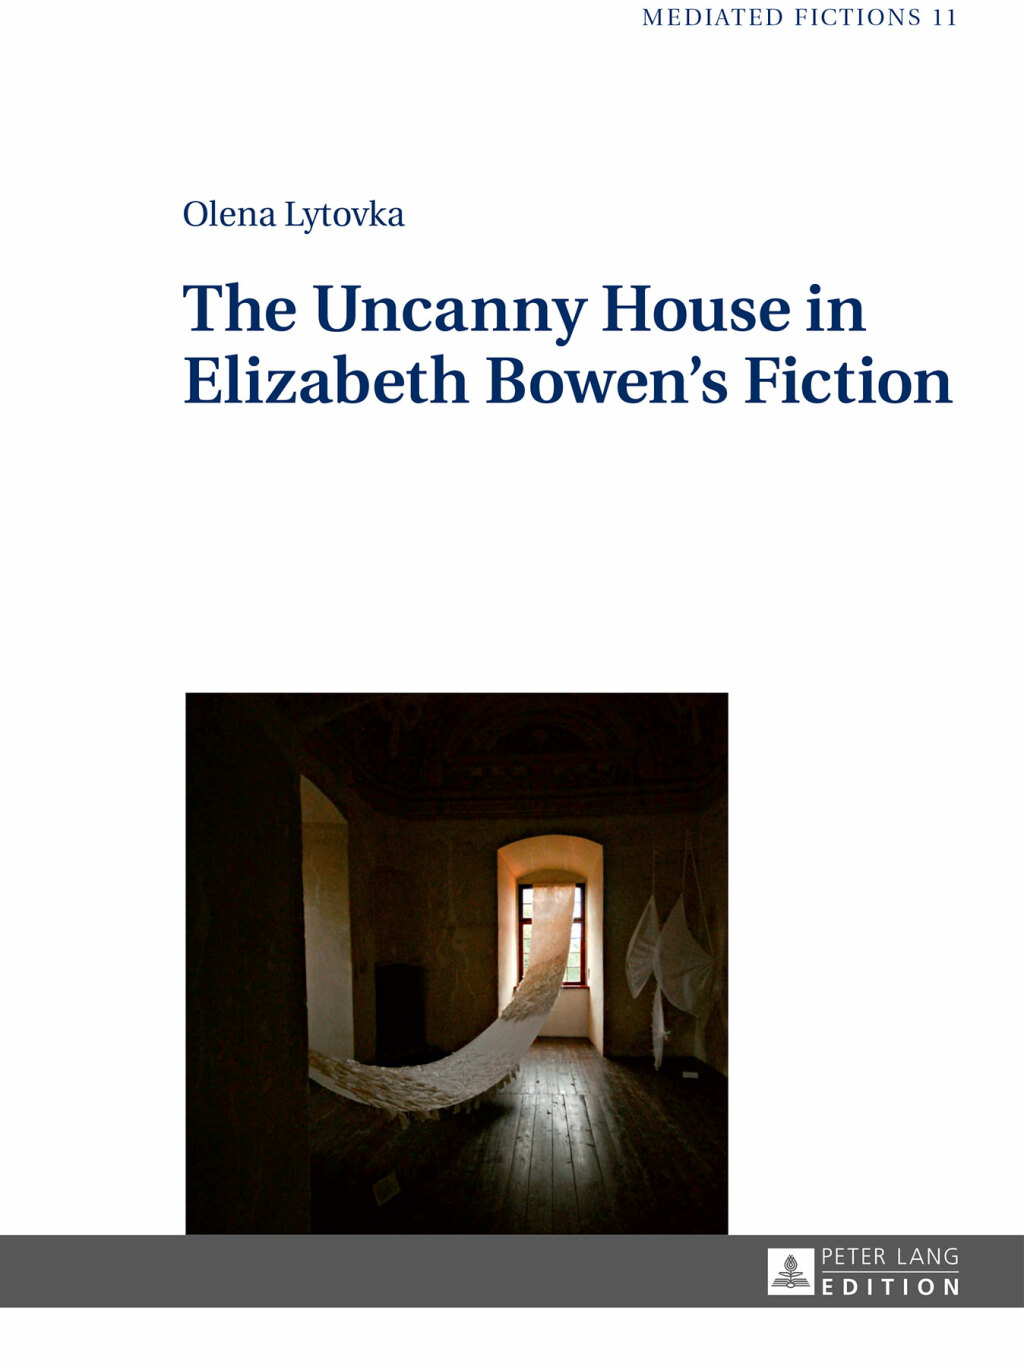 The Uncanny House in Elizabeth Bowens Fiction (eBook) - Olena Lytovka